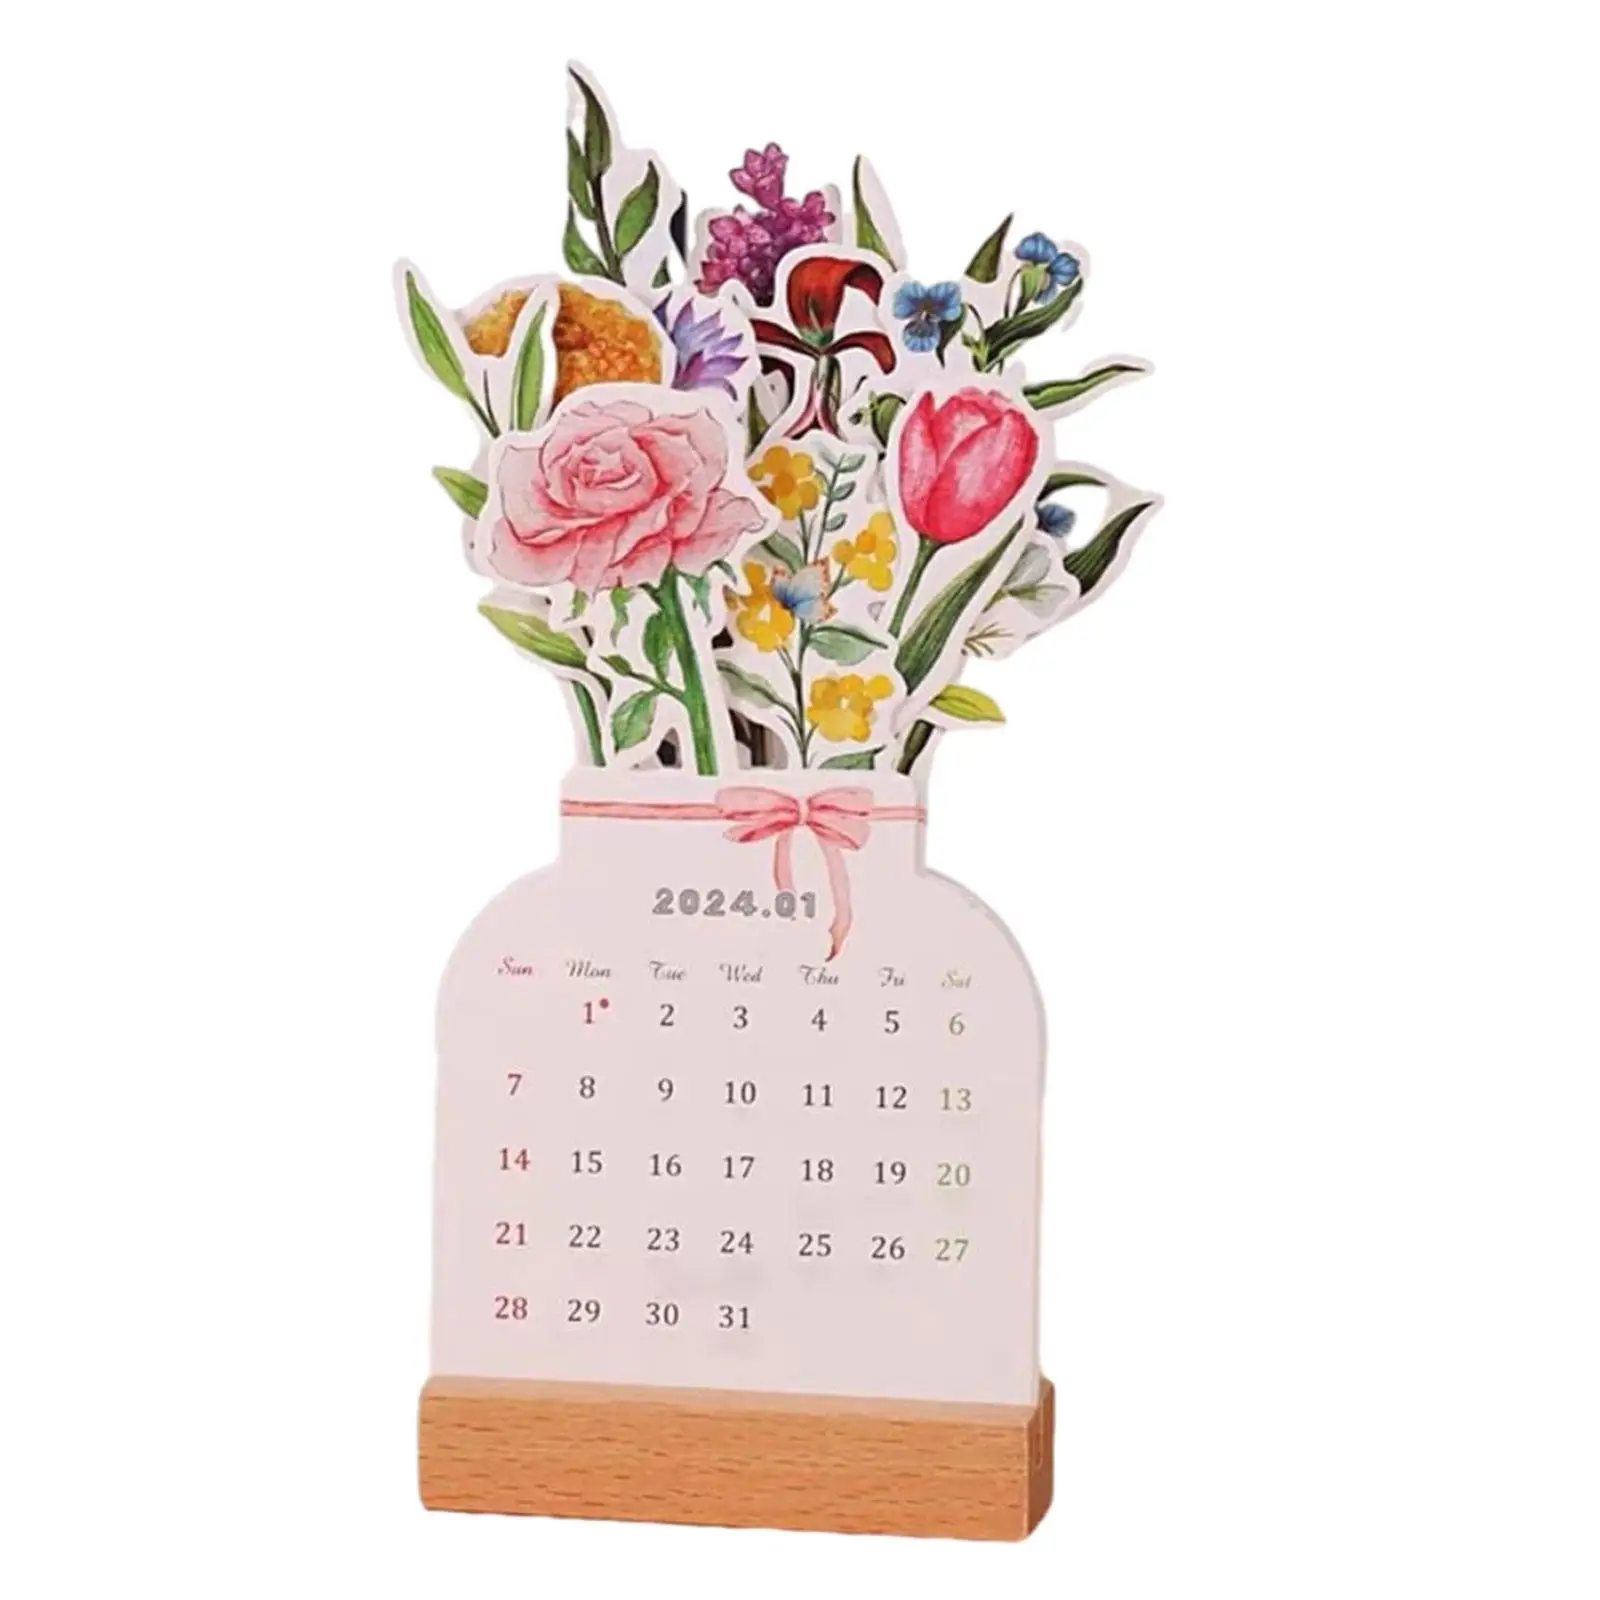 2024 Desk Calendar Wooden Base Jan 2024 - DEC 2024 Decoration Flower Desktop Calendar Tabletop Ornament Monthly Calendar Planner